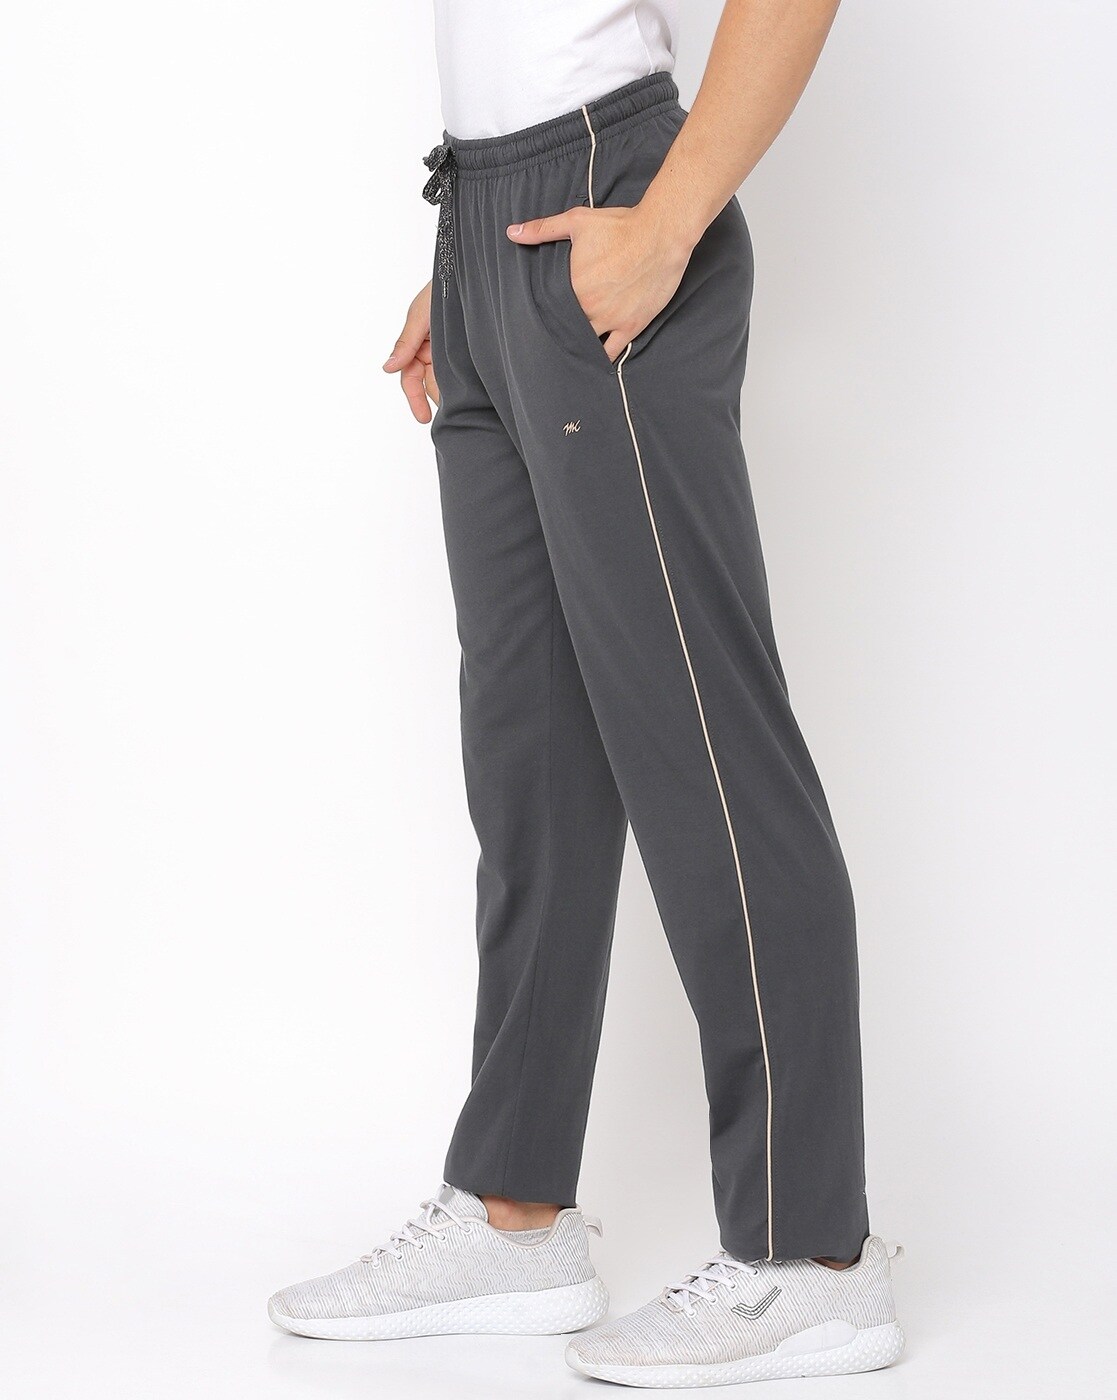 Burberry Men's Linen-cotton Track Pants in Black, Brand Size 46 (Small) -  Walmart.com